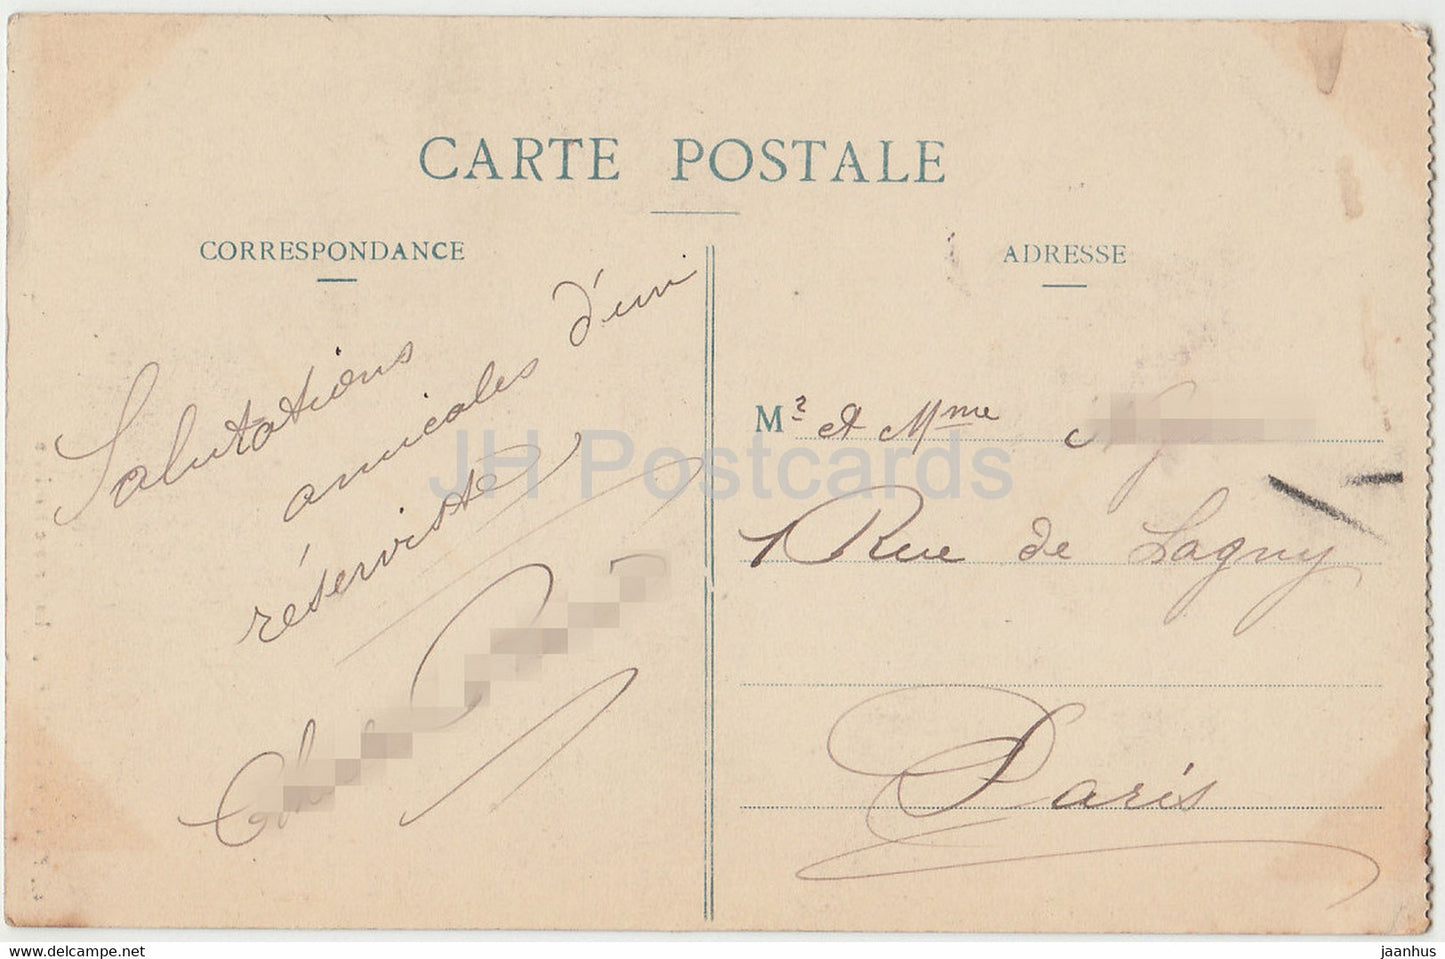 Rouen - La Grosse Horloge - clock - 458 - old postcard - 1910 - France - used